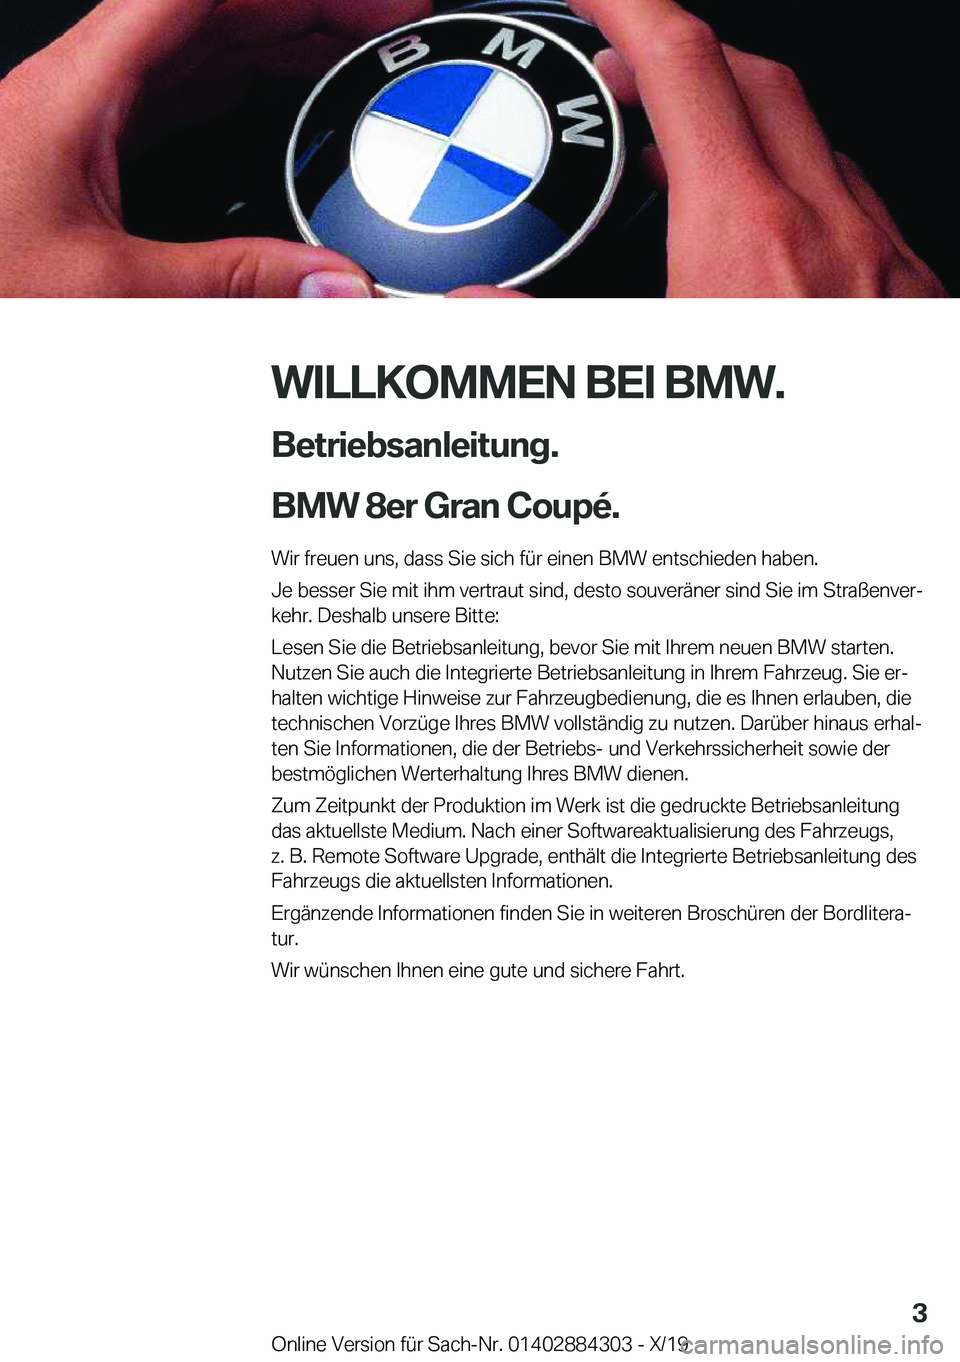 BMW 8 SERIES GRAN COUPE 2020  Betriebsanleitungen (in German) �W�I�L�L�K�O�M�M�E�N��B�E�I��B�M�W�.�B�e�t�r�i�e�b�s�a�n�l�e�i�t�u�n�g�.
�B�M�W��8�e�r��G�r�a�n��C�o�u�p�